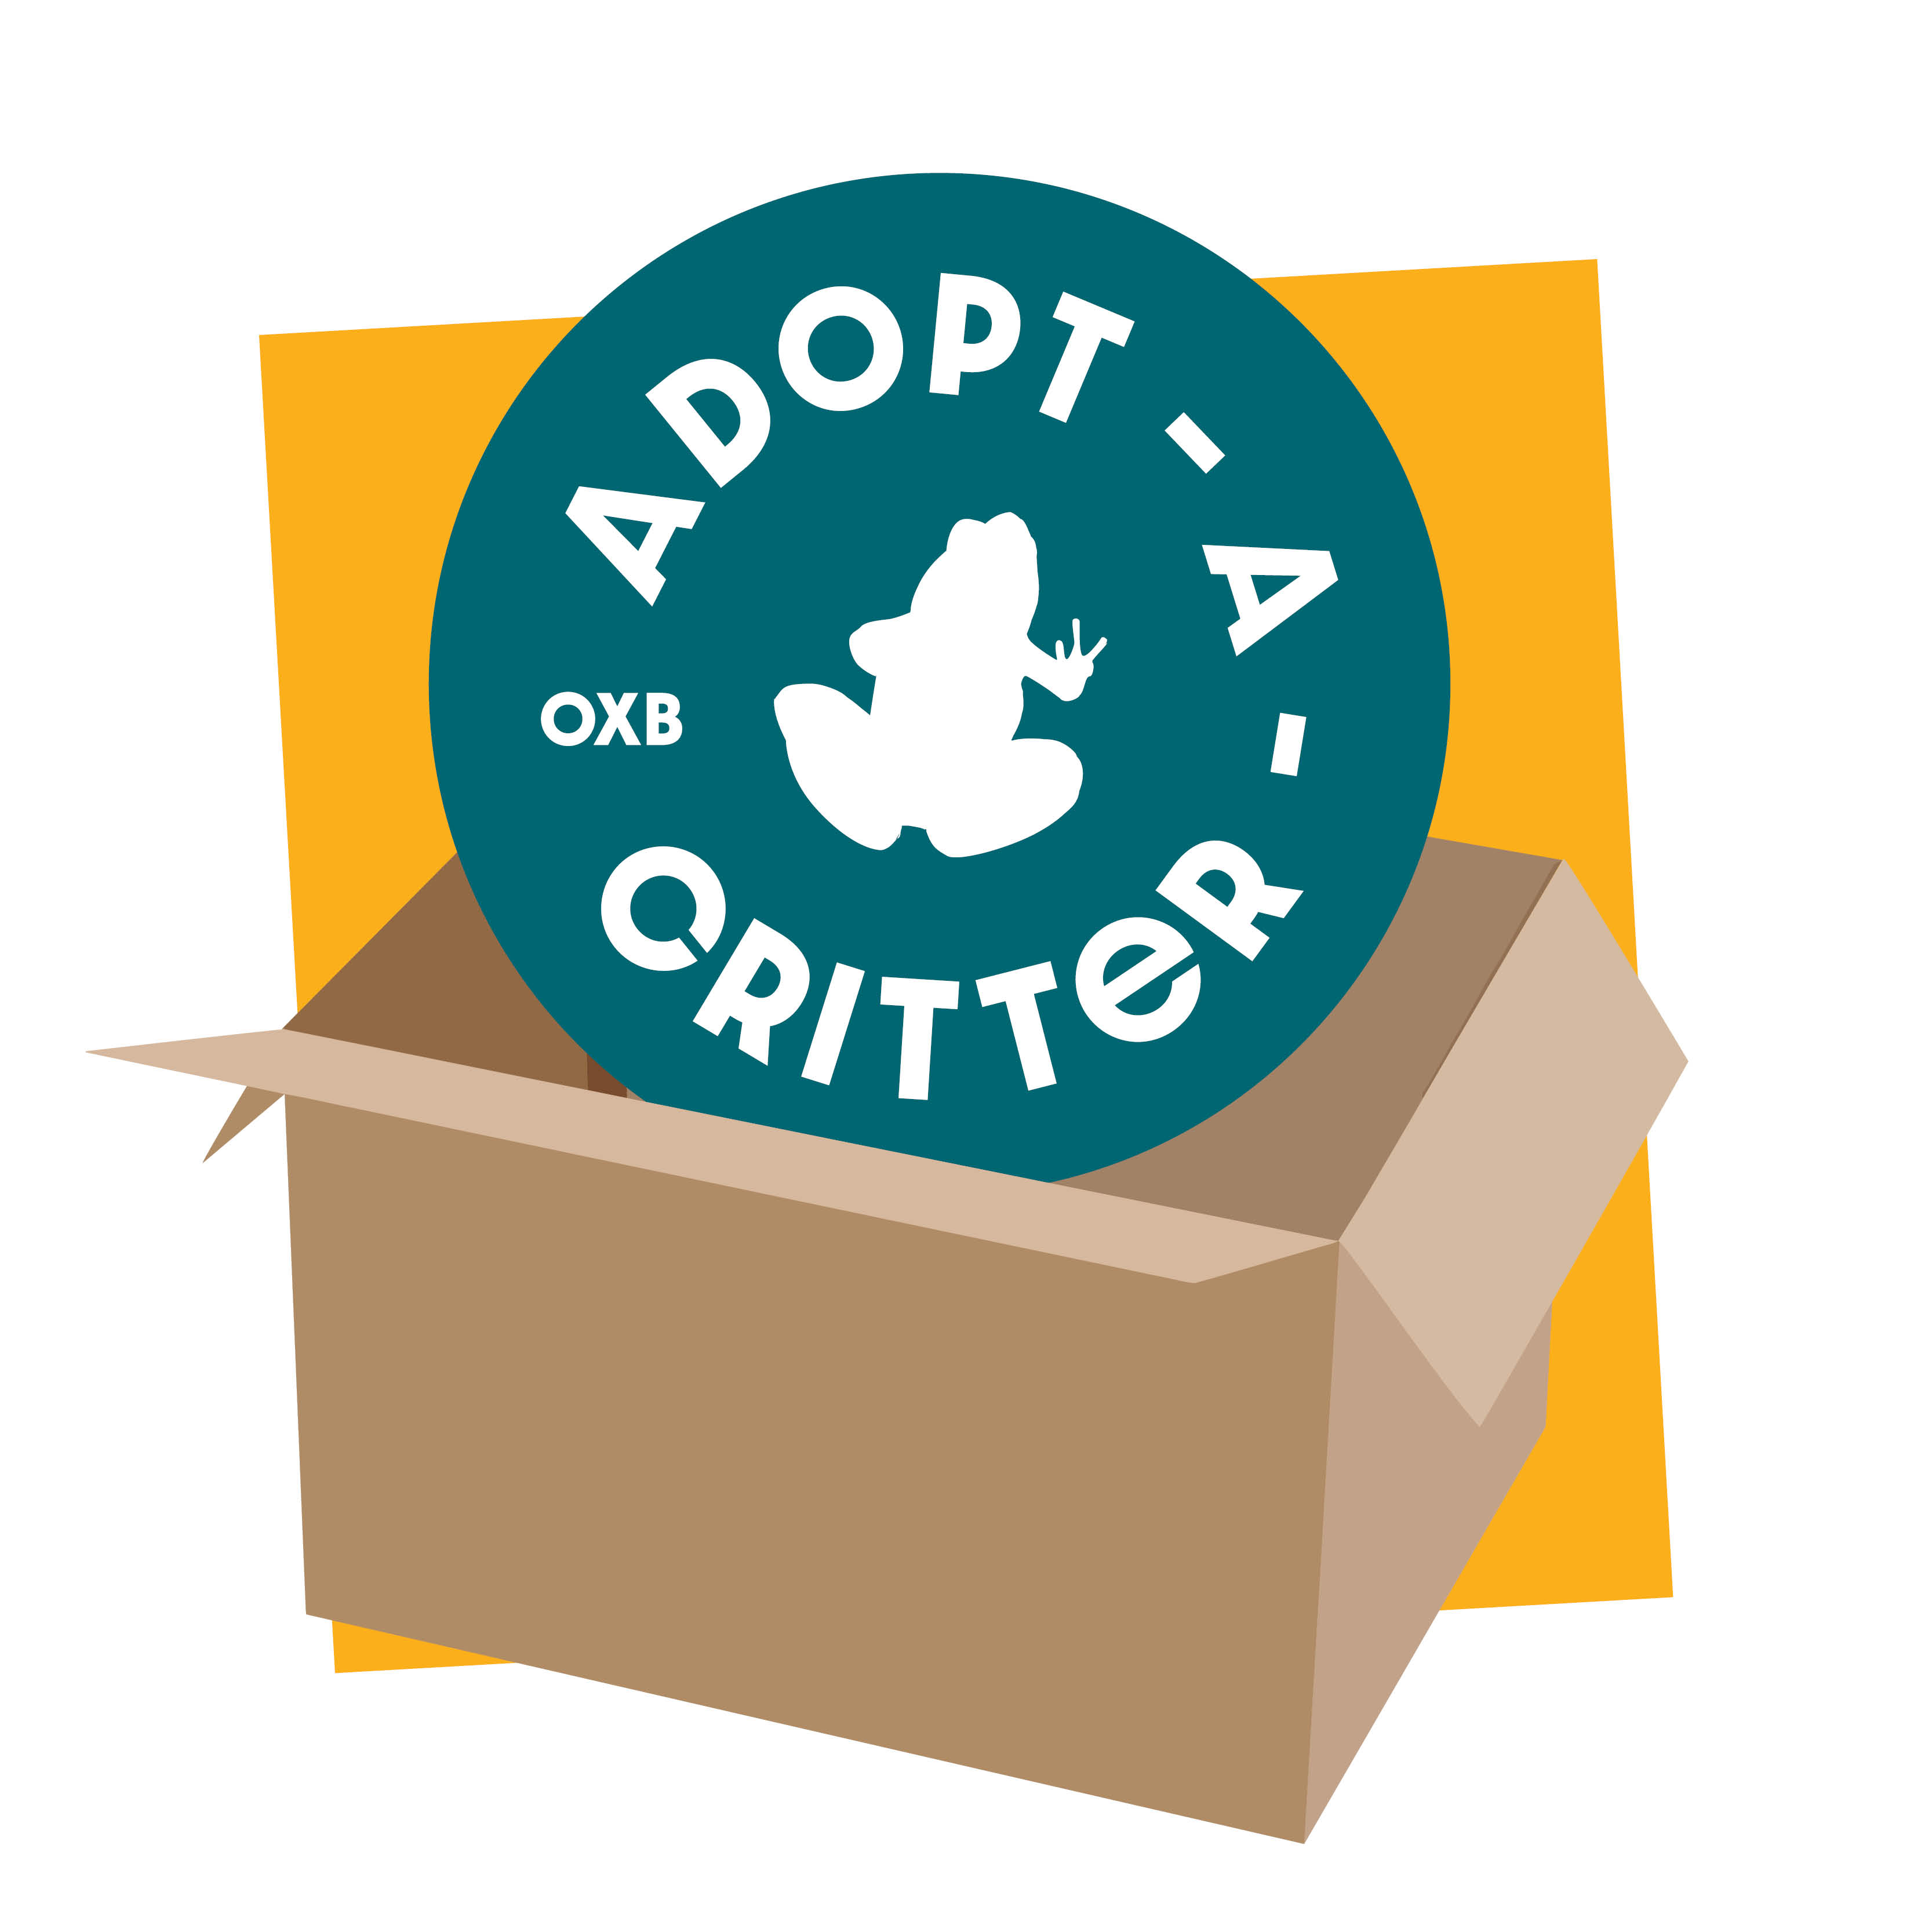 Adopt-A-Critter Logo in a cardbaord box